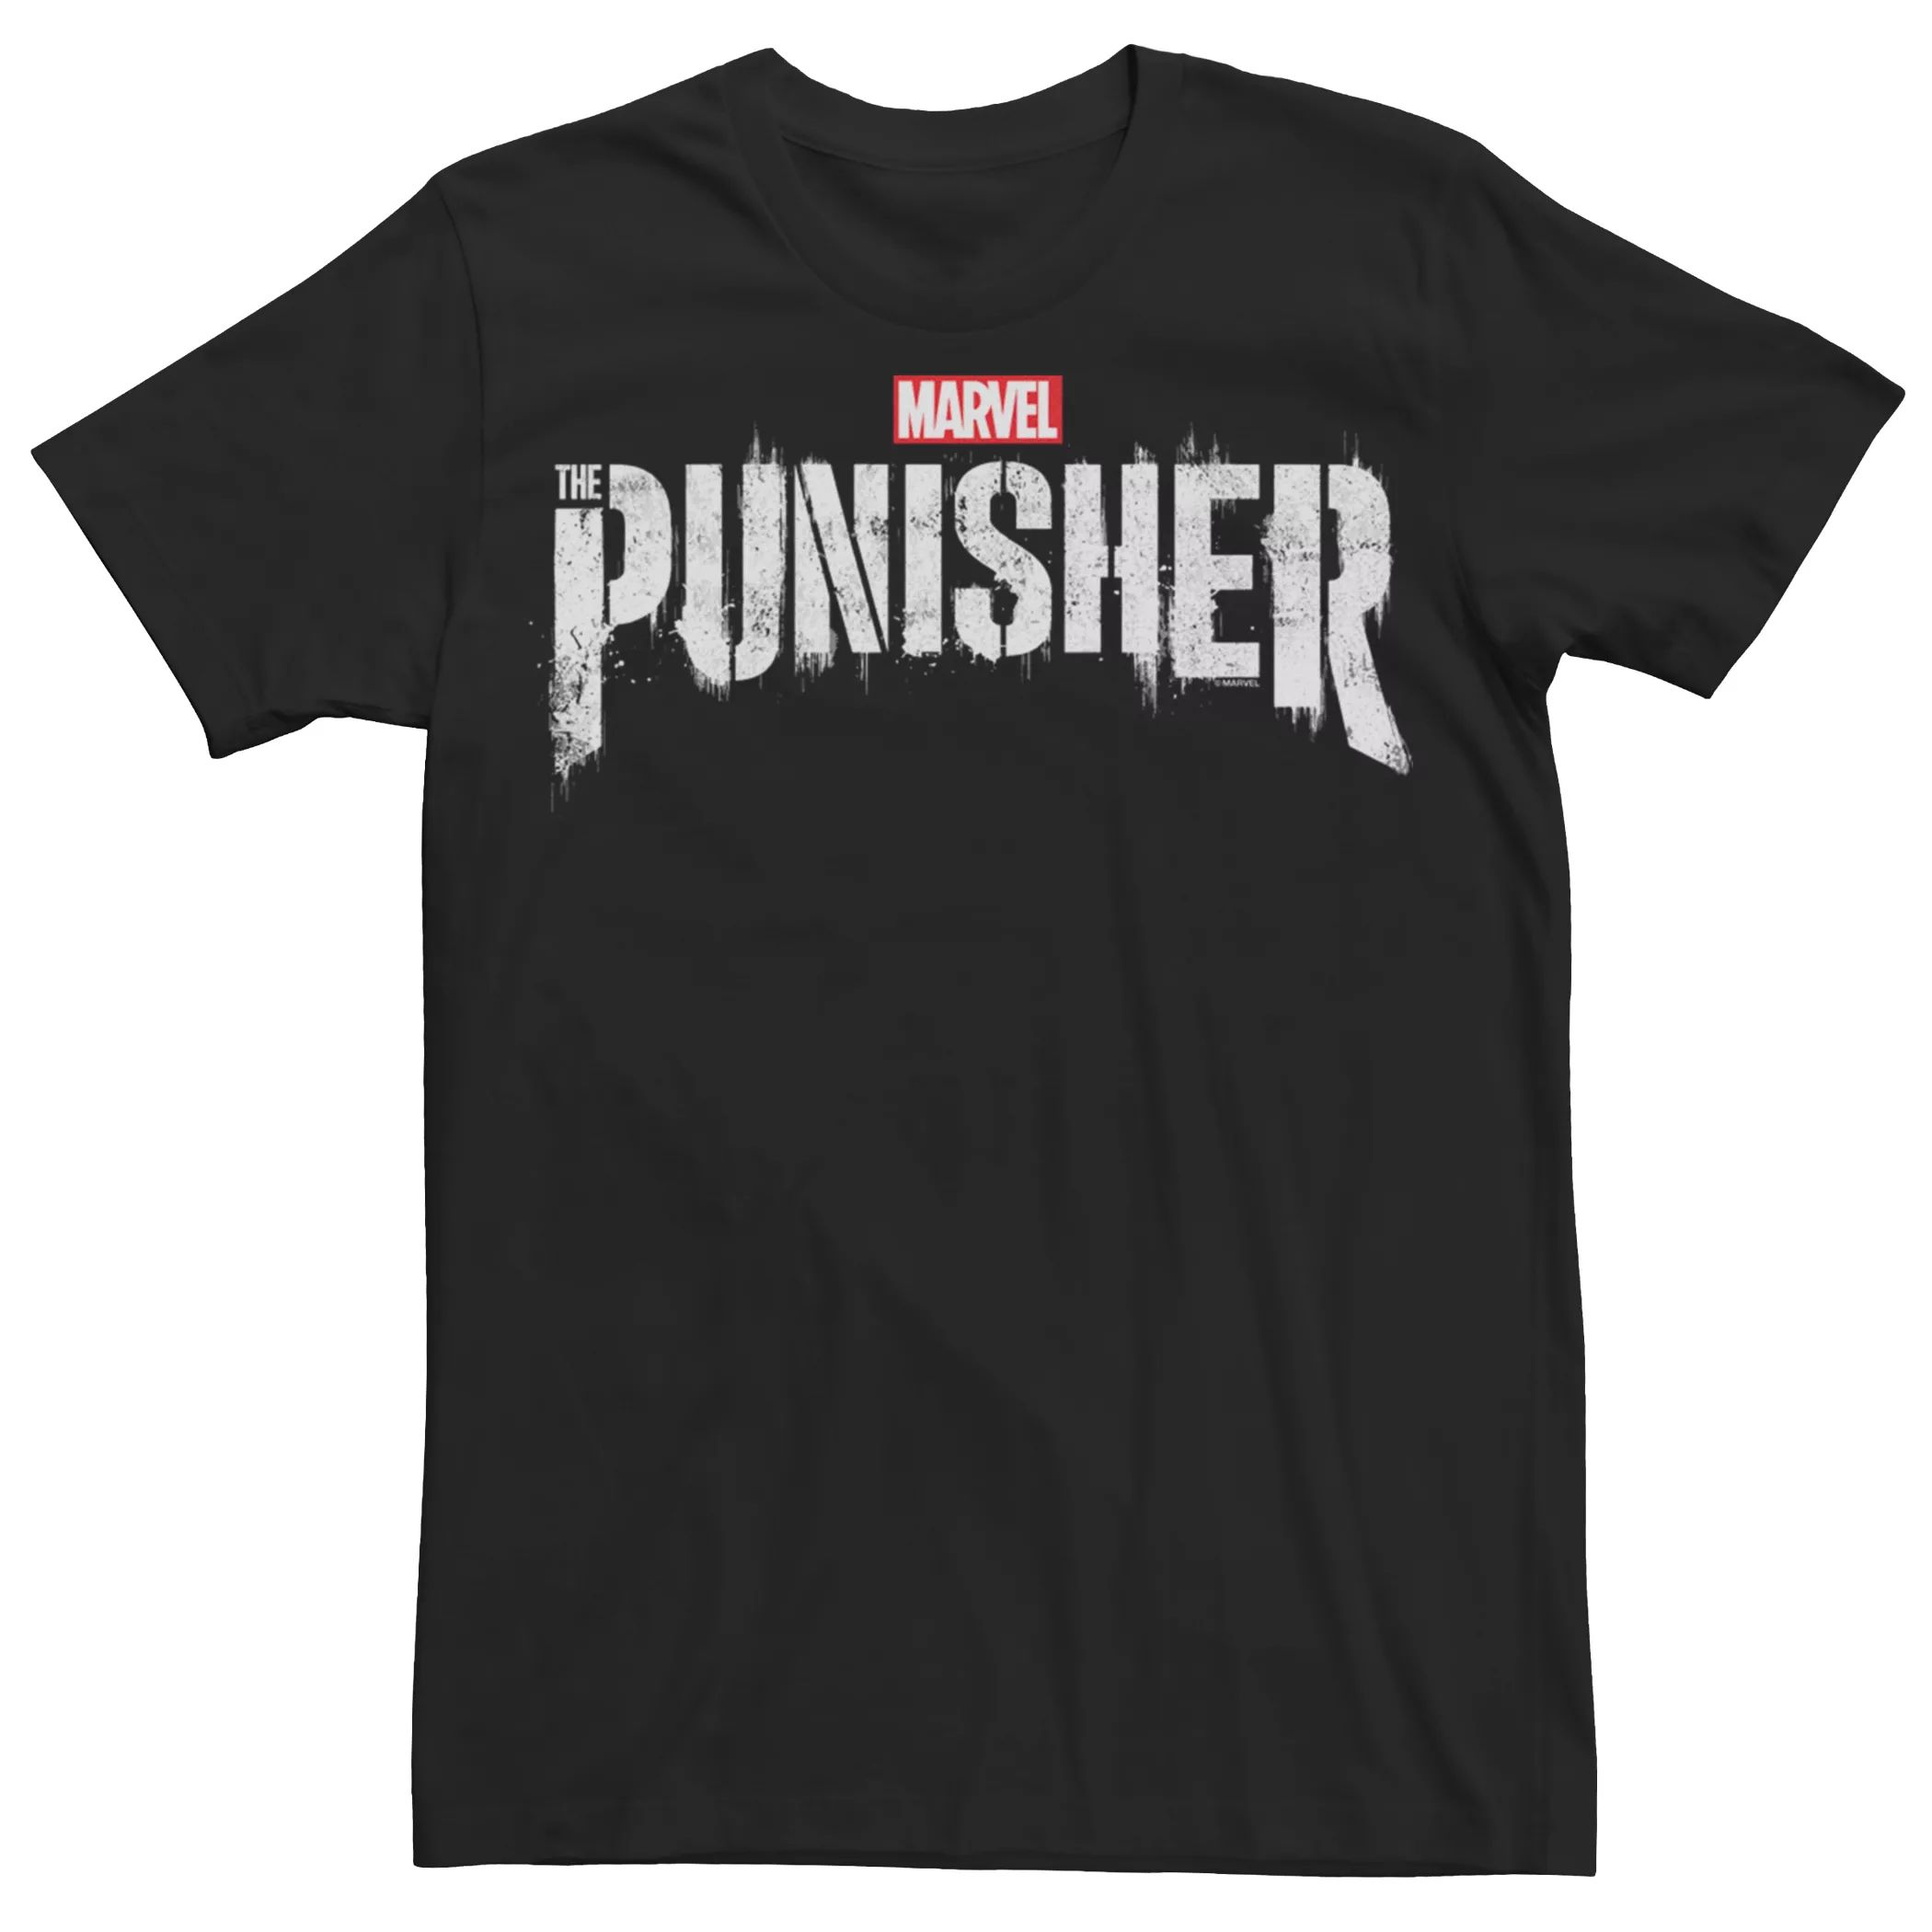 Мужская футболка с рисунком Marvel Punisher Licensed Character футболка мужская marvel punisher s